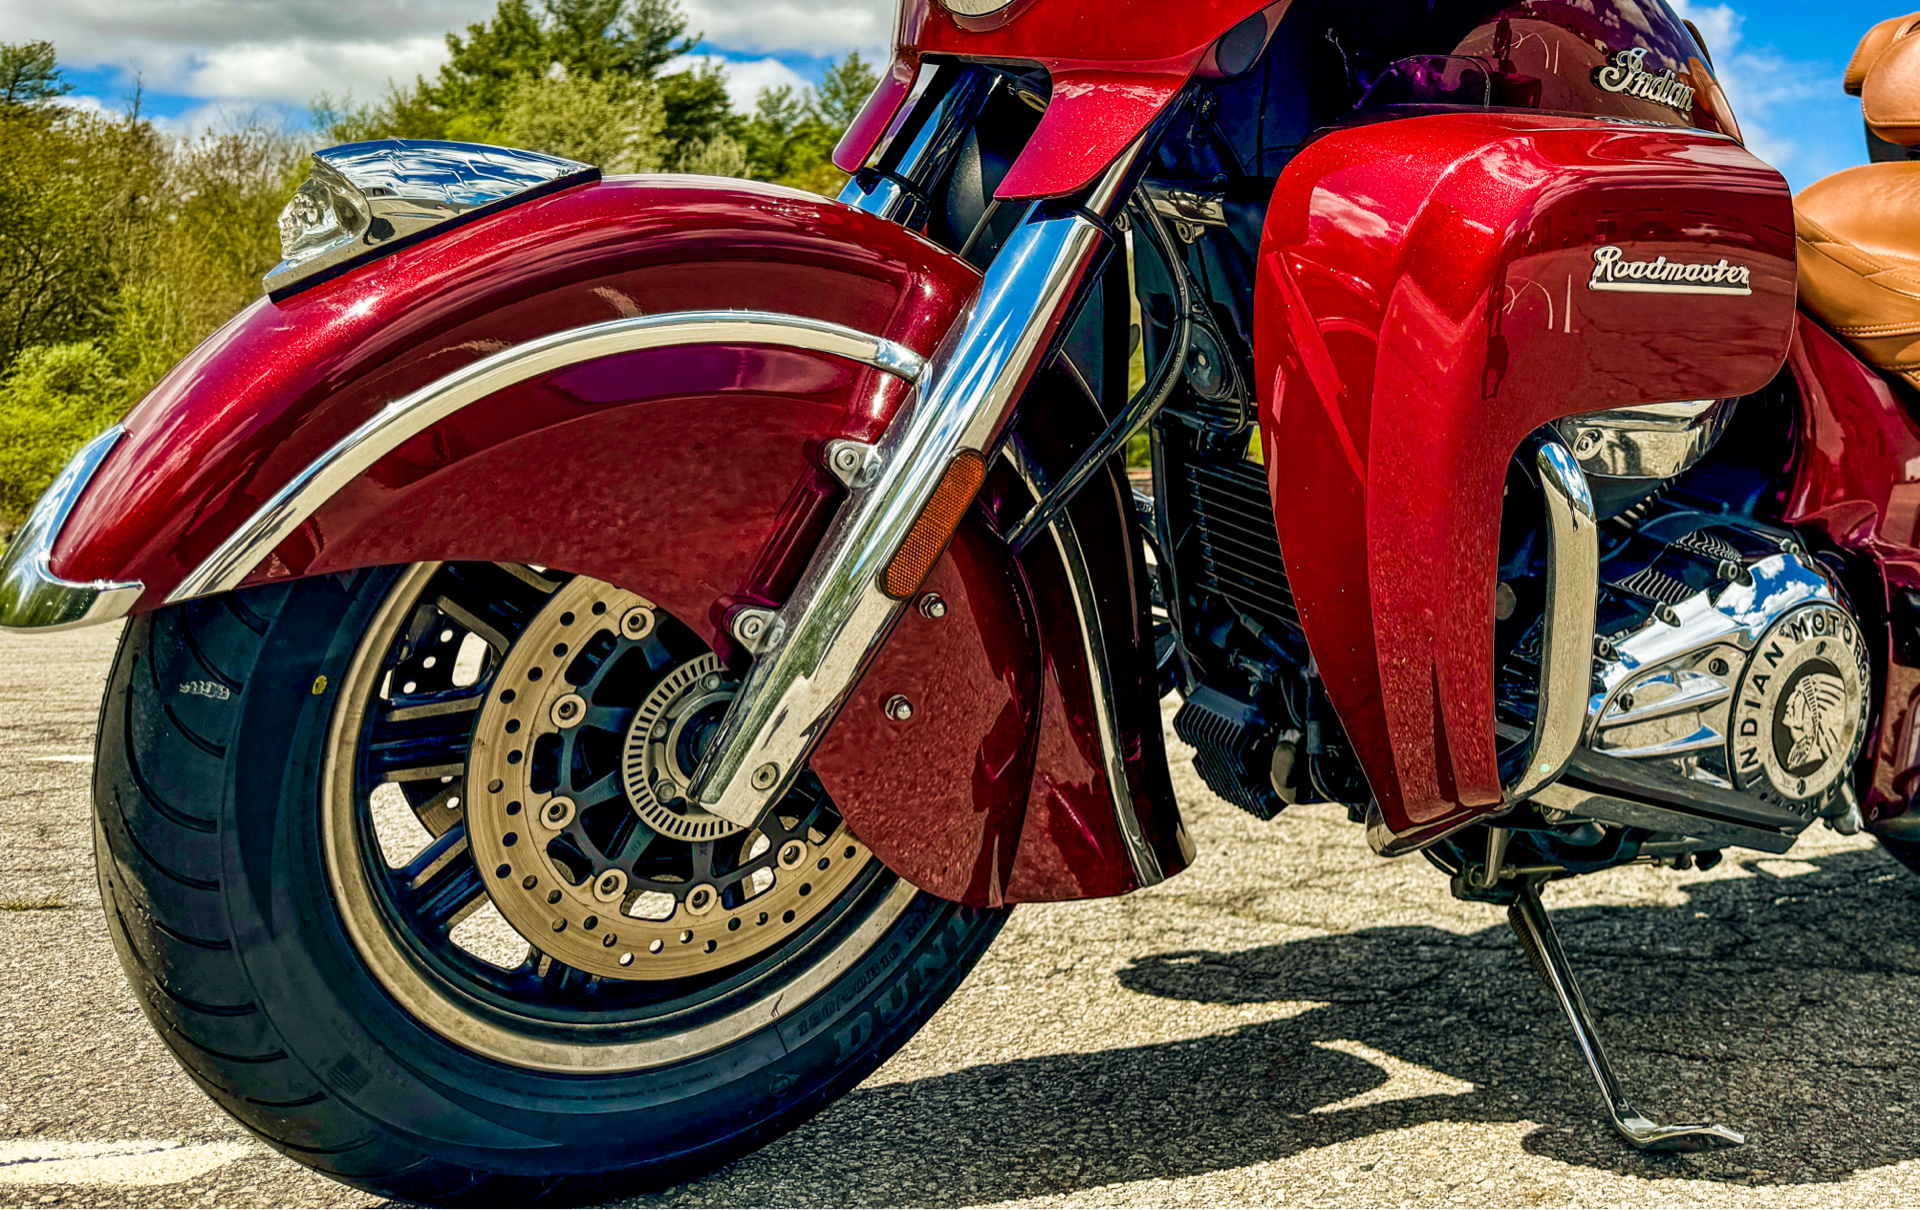 2018 Indian Motorcycle Roadmaster® ABS in Foxboro, Massachusetts - Photo 17